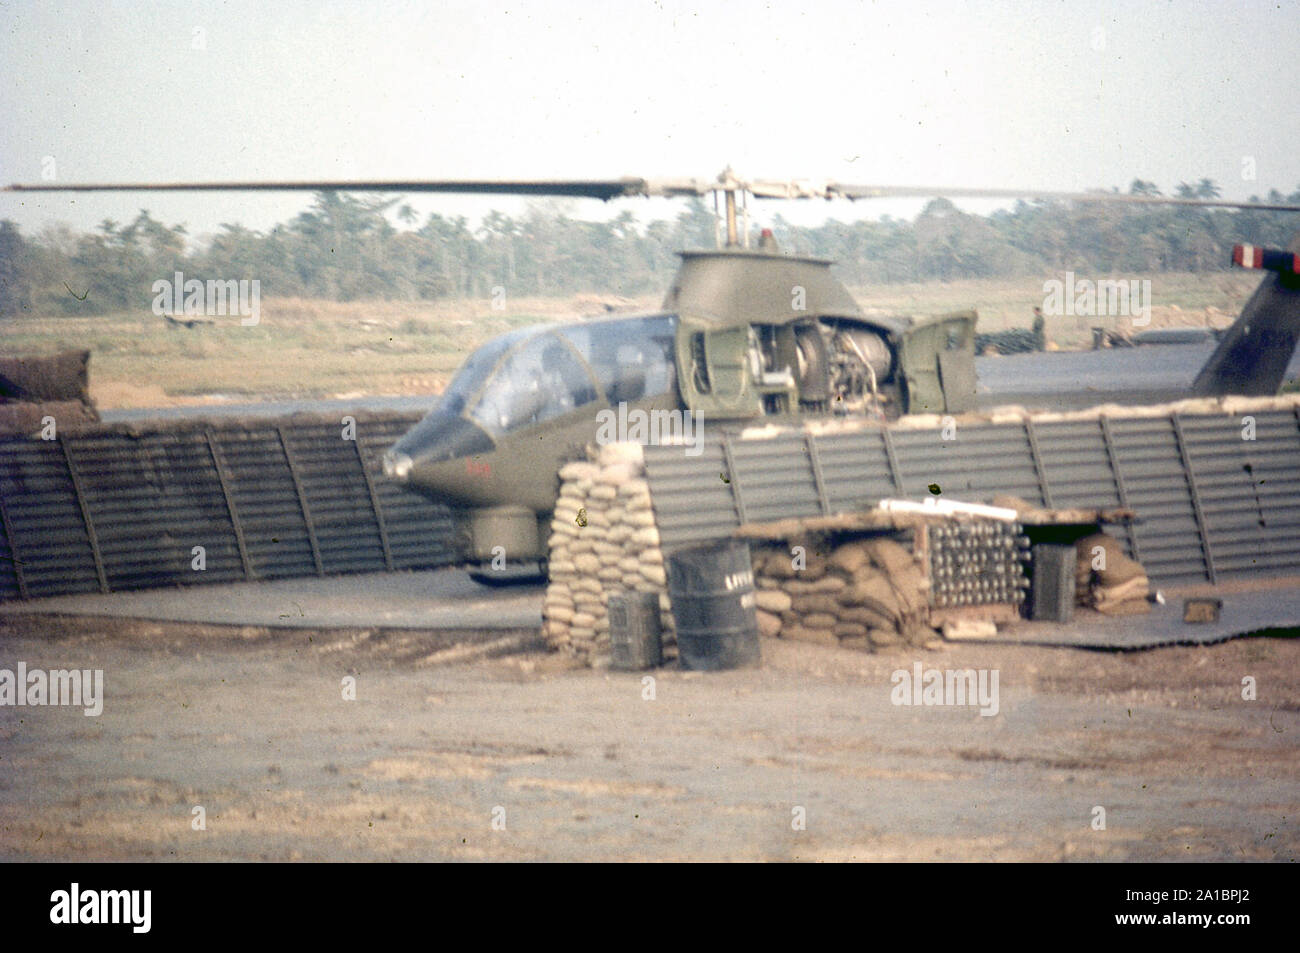 USA Vietnam-Krieg / Vietnam War  - US ARMY / United States Army Bell AH-1G Cobra Stock Photo